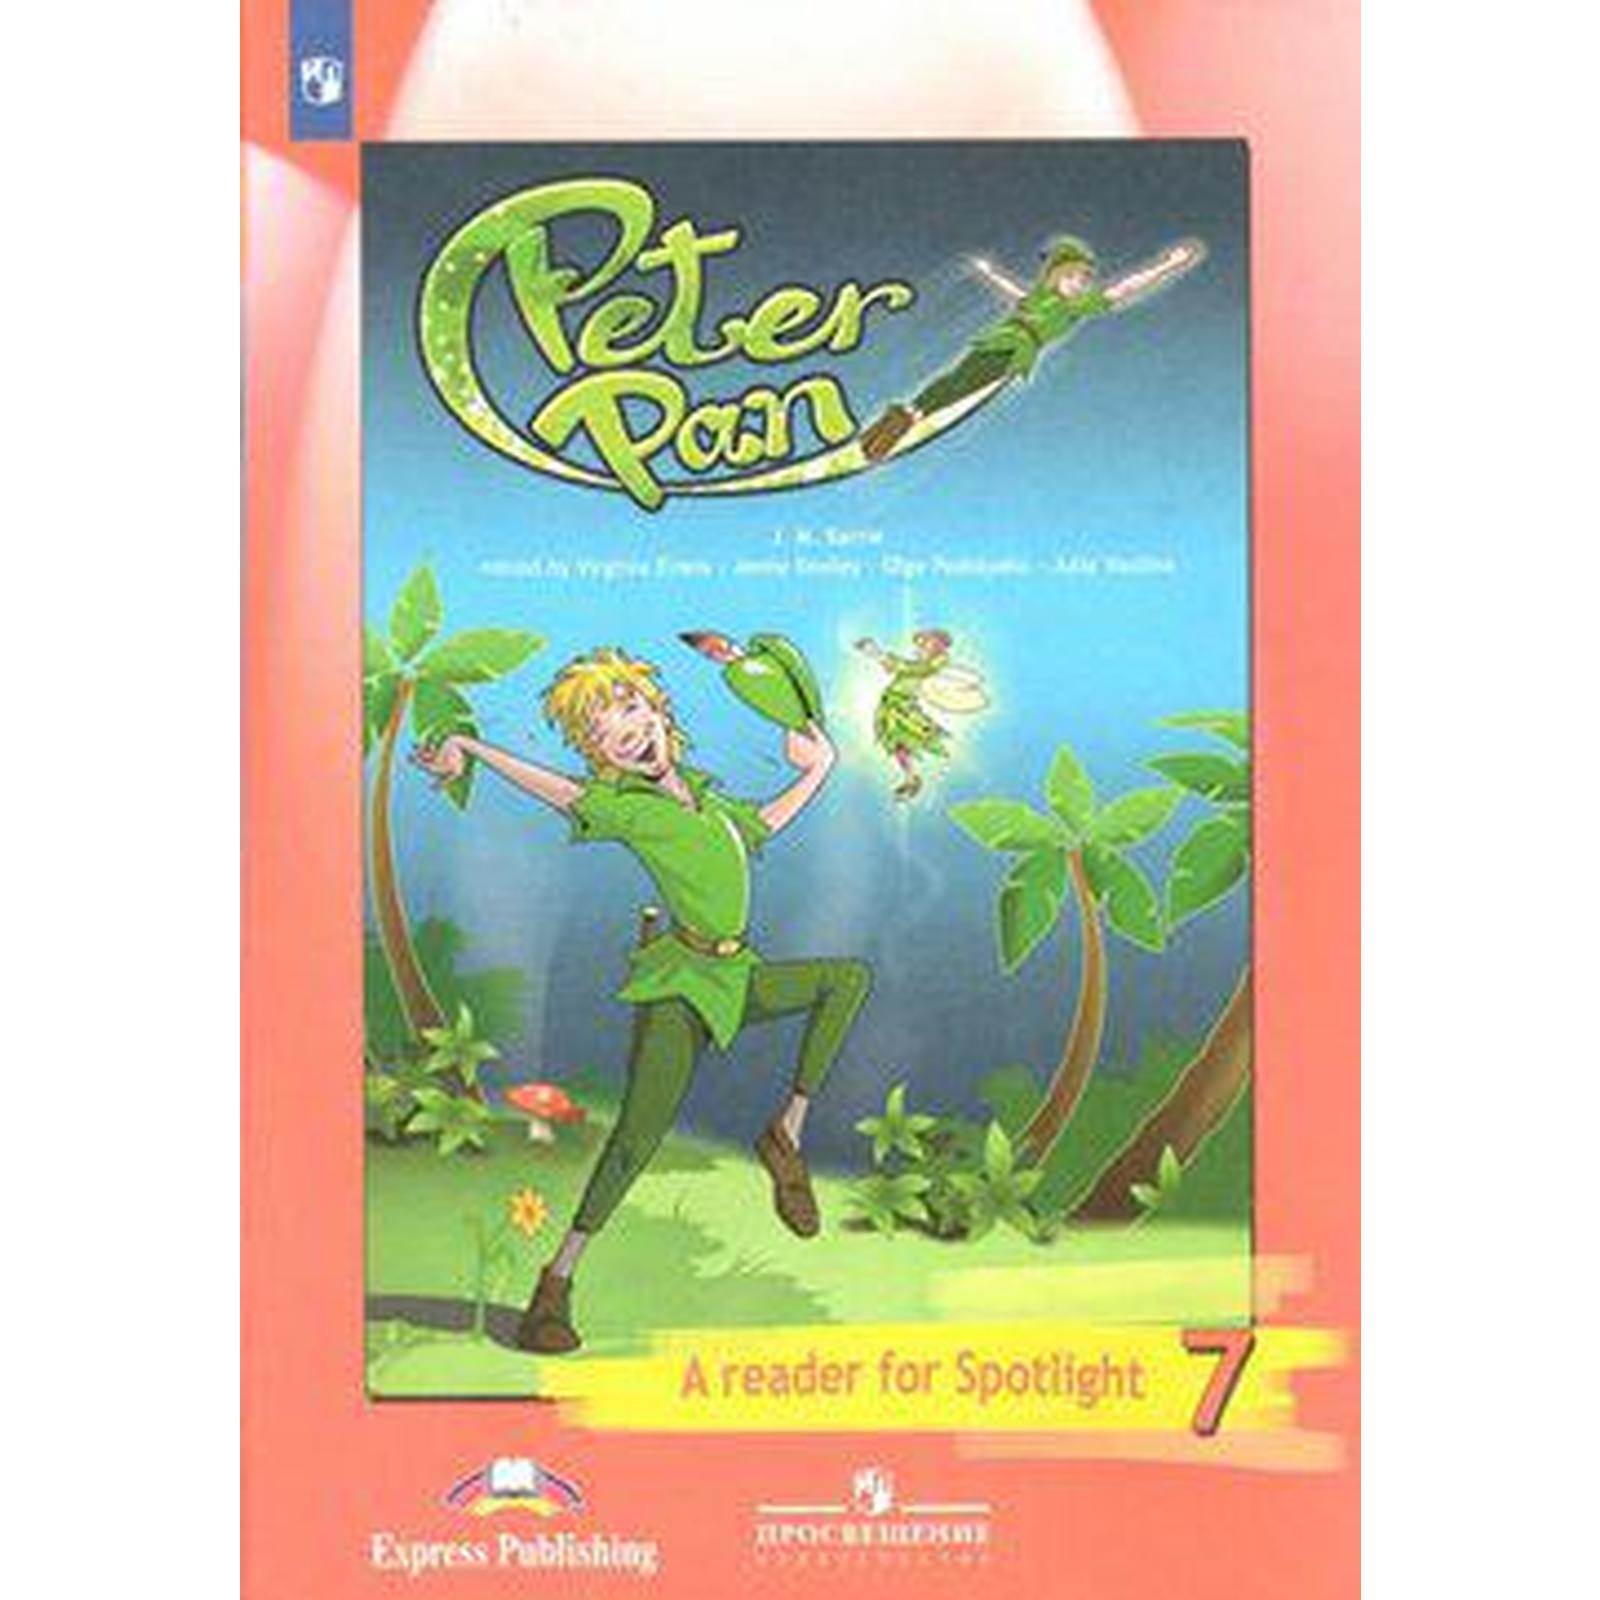 Peter pan 7. Питер Пэн книга для чтения. Питер Пэн английский язык 7 класс. Питер Пэн a Reader for Spotlight 7. Питер пен 7 класс книга для чтения.